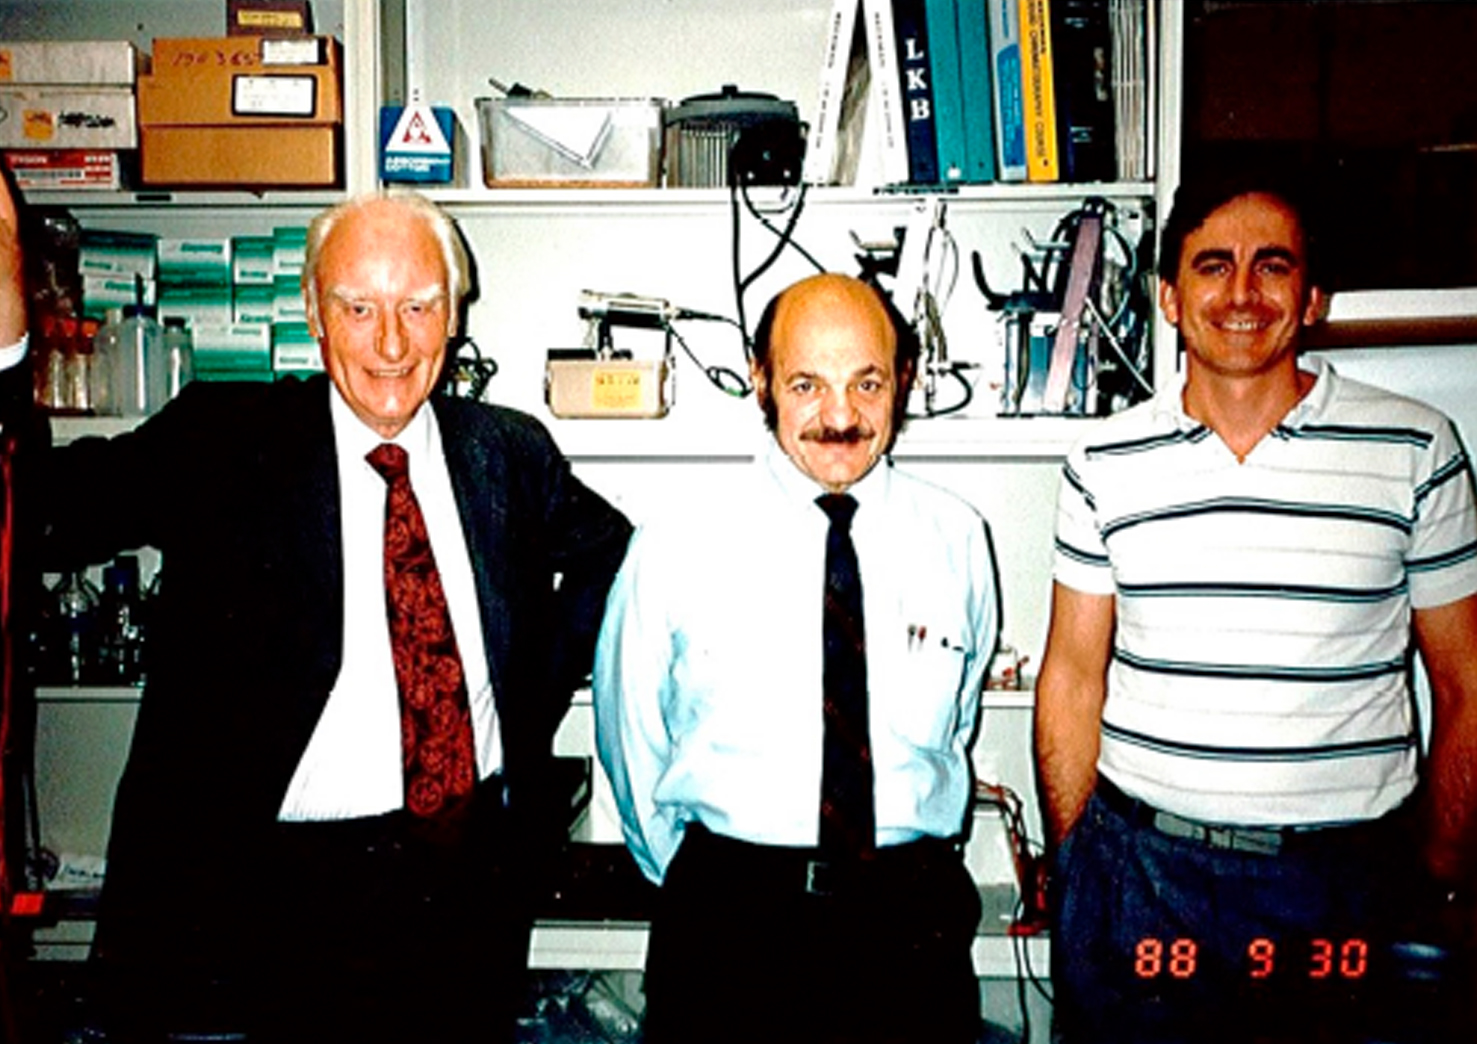 Francis Crick, Alex Rich and Alan Herbert